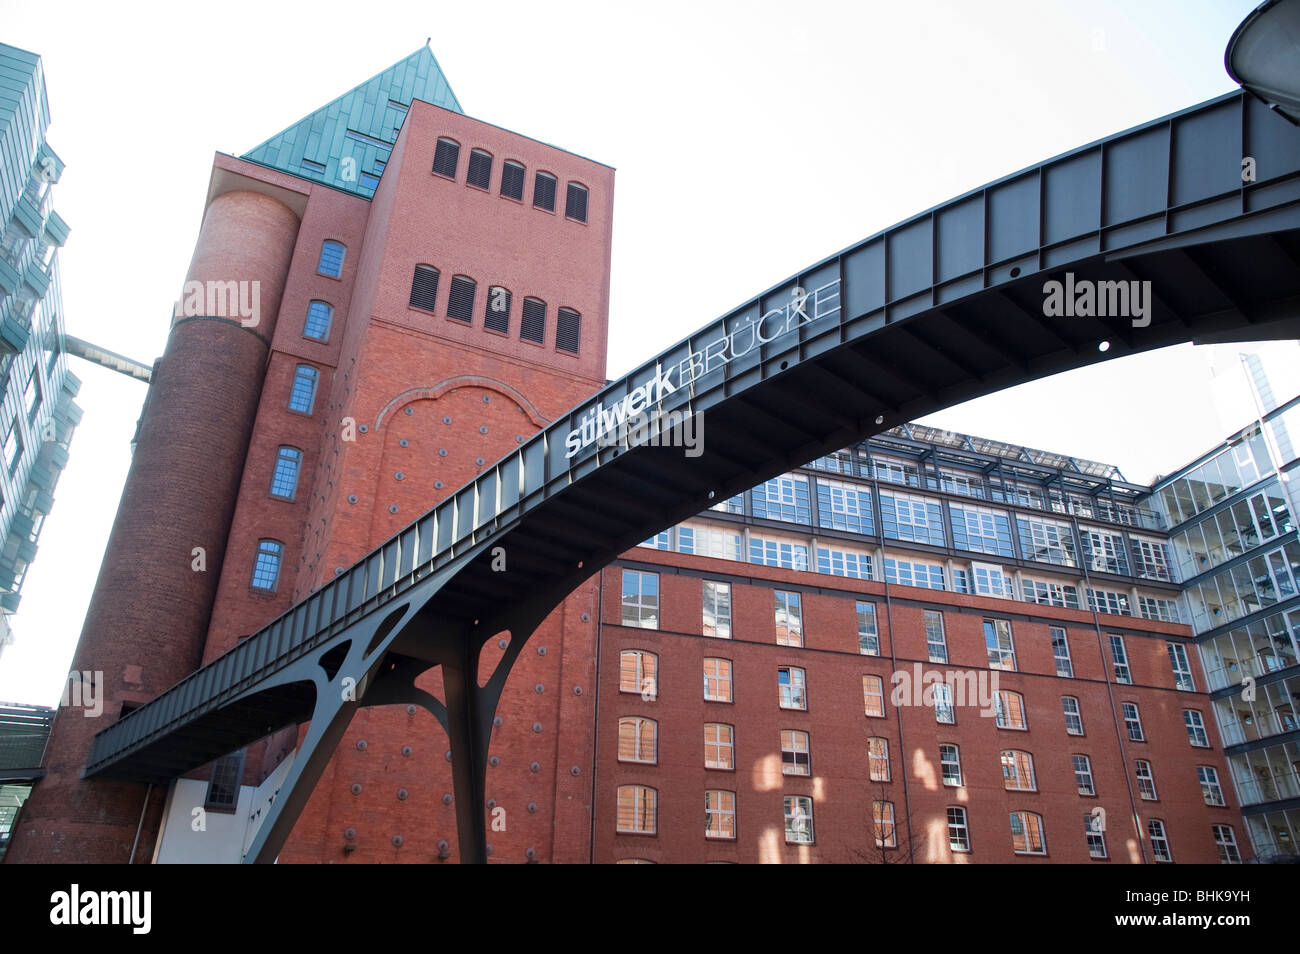 Stilwerk and bridge, Altona, port, Hamburg, Germany Stock Photo